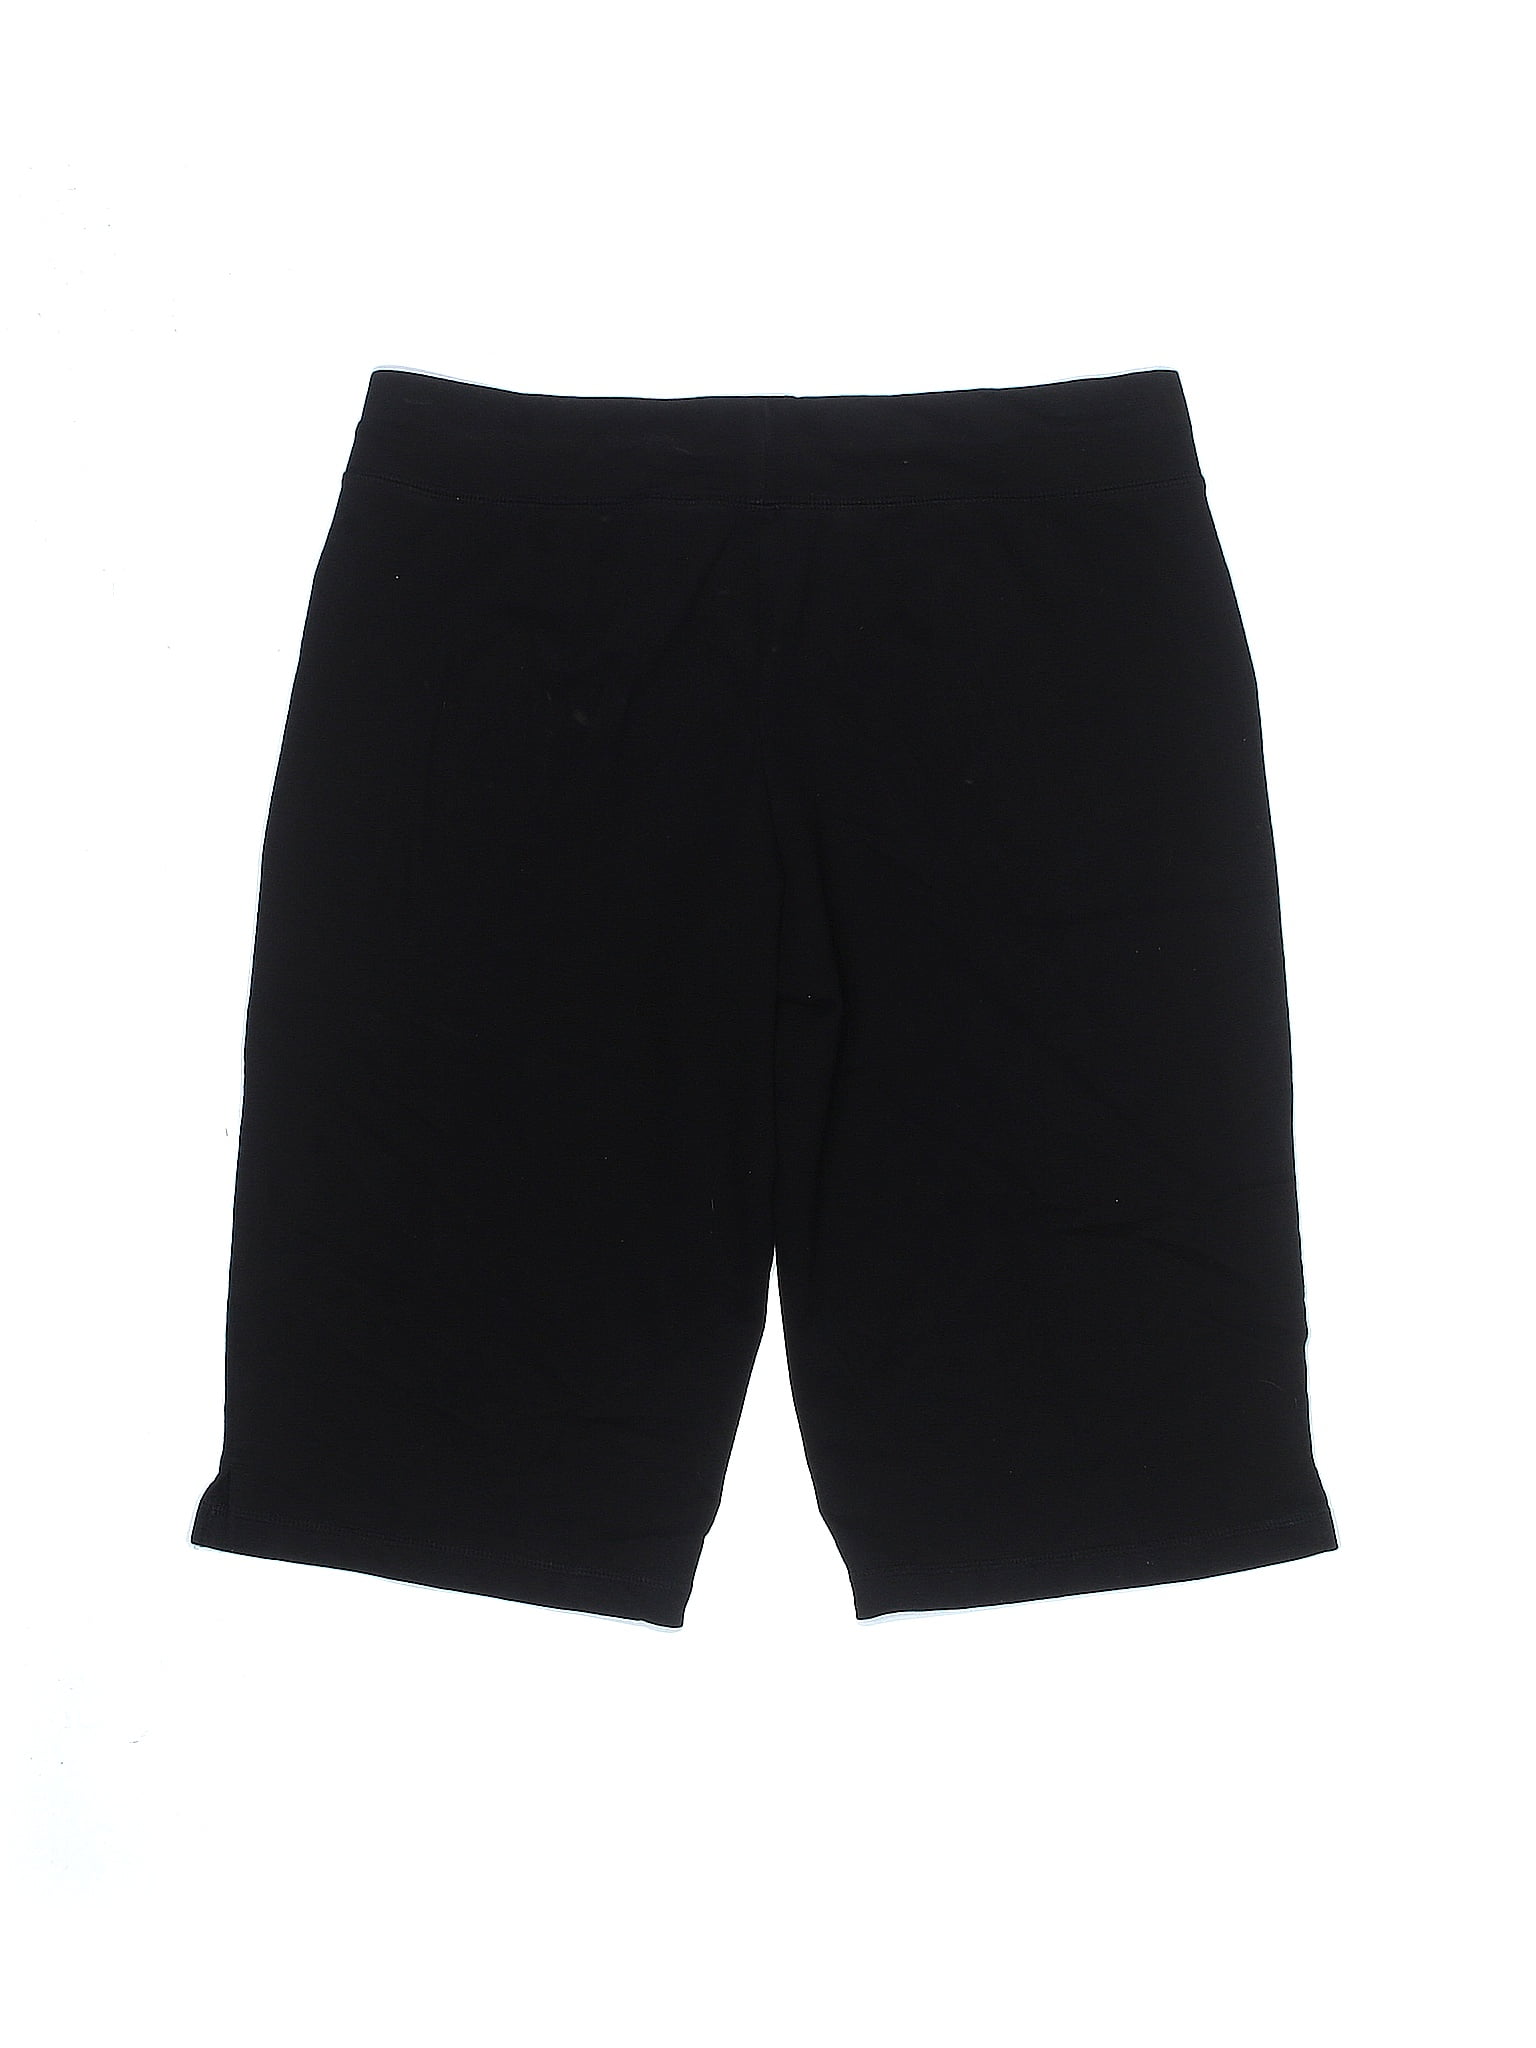 Danskin Now Black Athletic Shorts